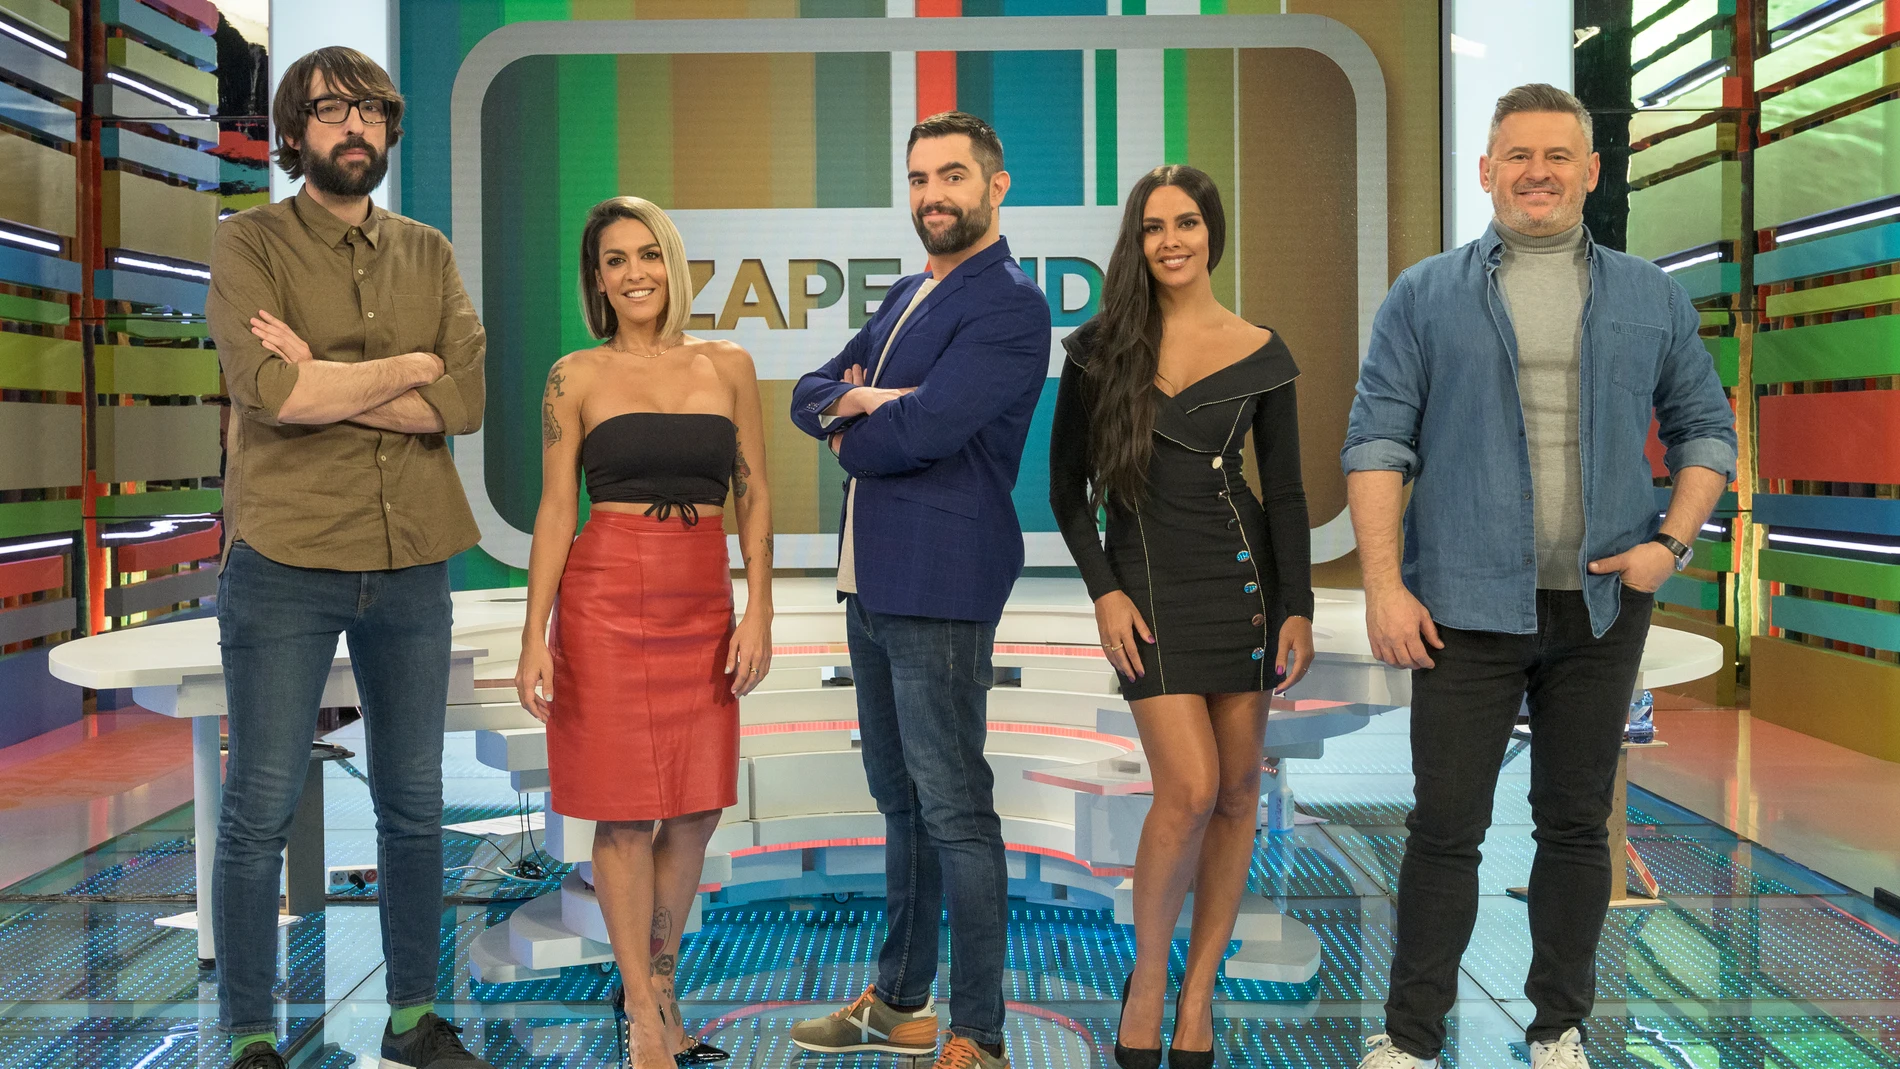 El equipo de Zapeando, de izda. a drcha.: Quique Peinado, Lorena Castell, Dani Mateo, Cristina Pedroche y Miki Nadal